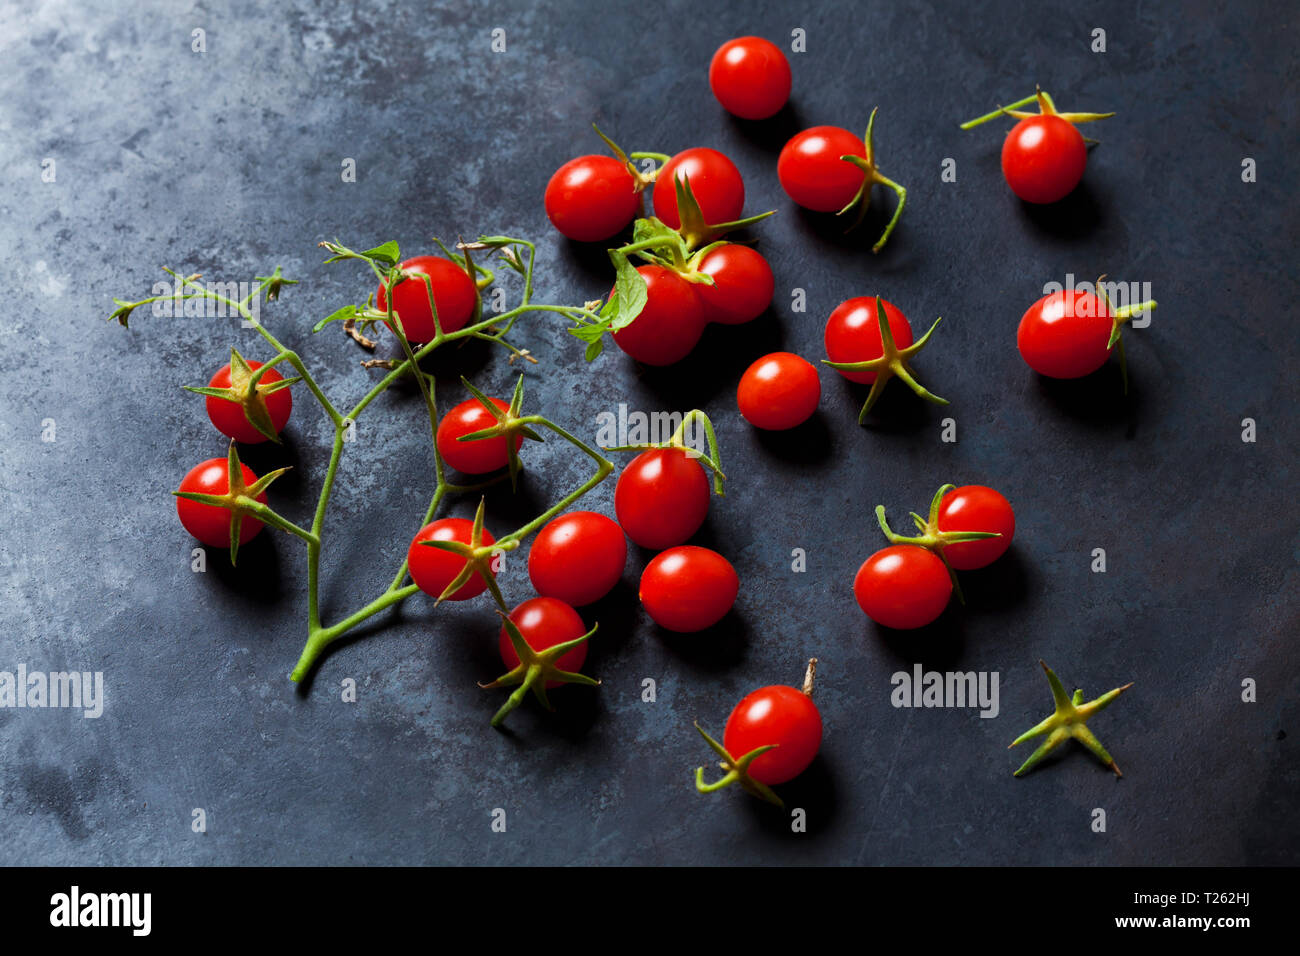 Currant tomatoes on dark ground Stock Photo